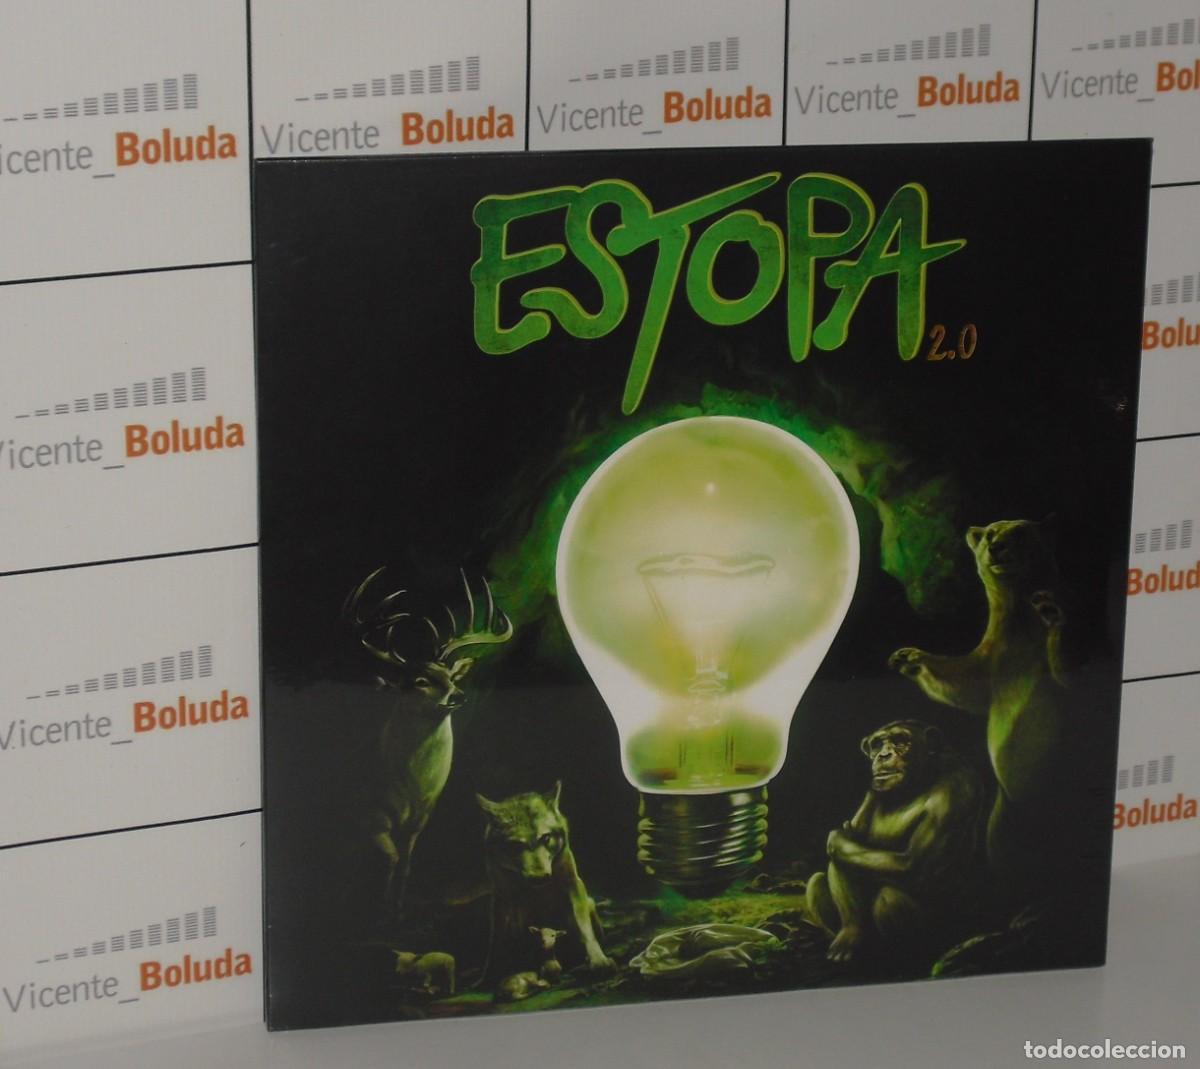 estopa 2.0 (edición color verde ) (lp-vinilo) n - Acquista Dischi LP di  altri stili musicali su todocoleccion